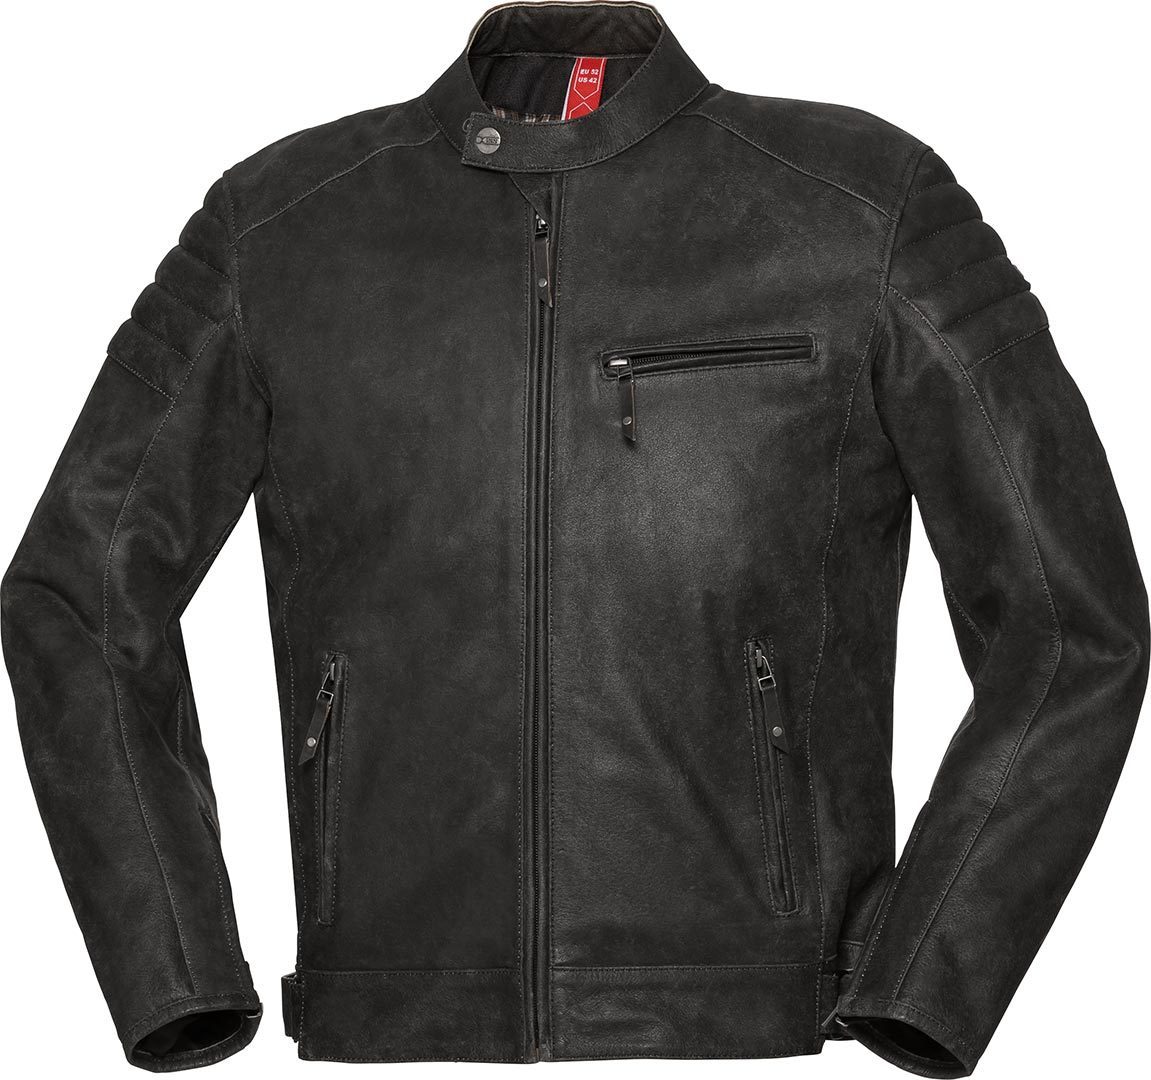 Ixs X-Classic Ld Cruiser Motorcycle Leather Jacket  - Black